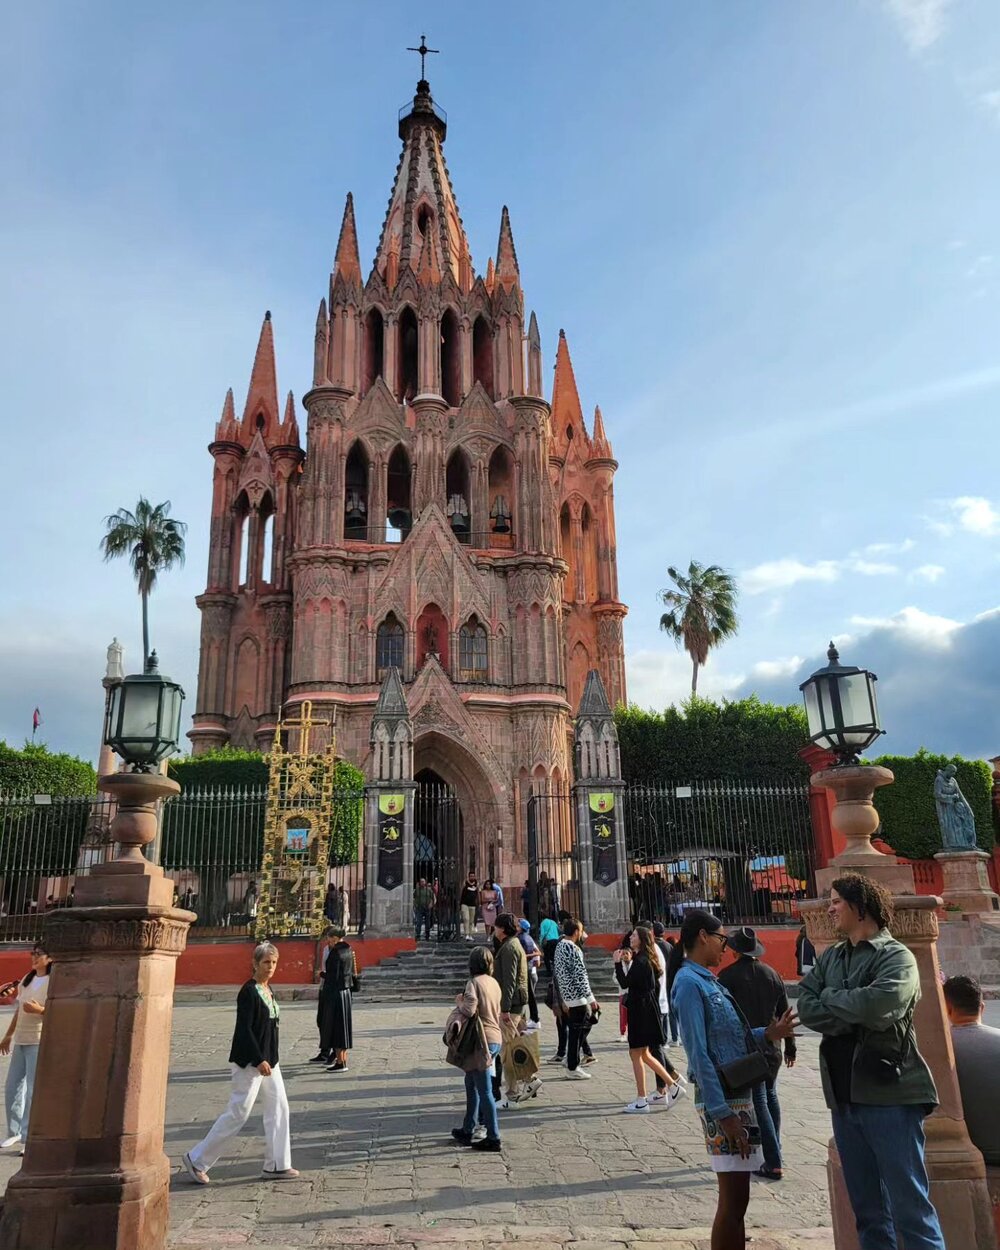 Architecture - Life - Landscape - Colour // San Miguel de Allende, Mexico - 2023 

#sanmigueldeallende #mexico #travel #explore #architecture #design #color #colorful #beautiful #churches #oldchurches #history #traveller #mexicandesign #lifestyle #li